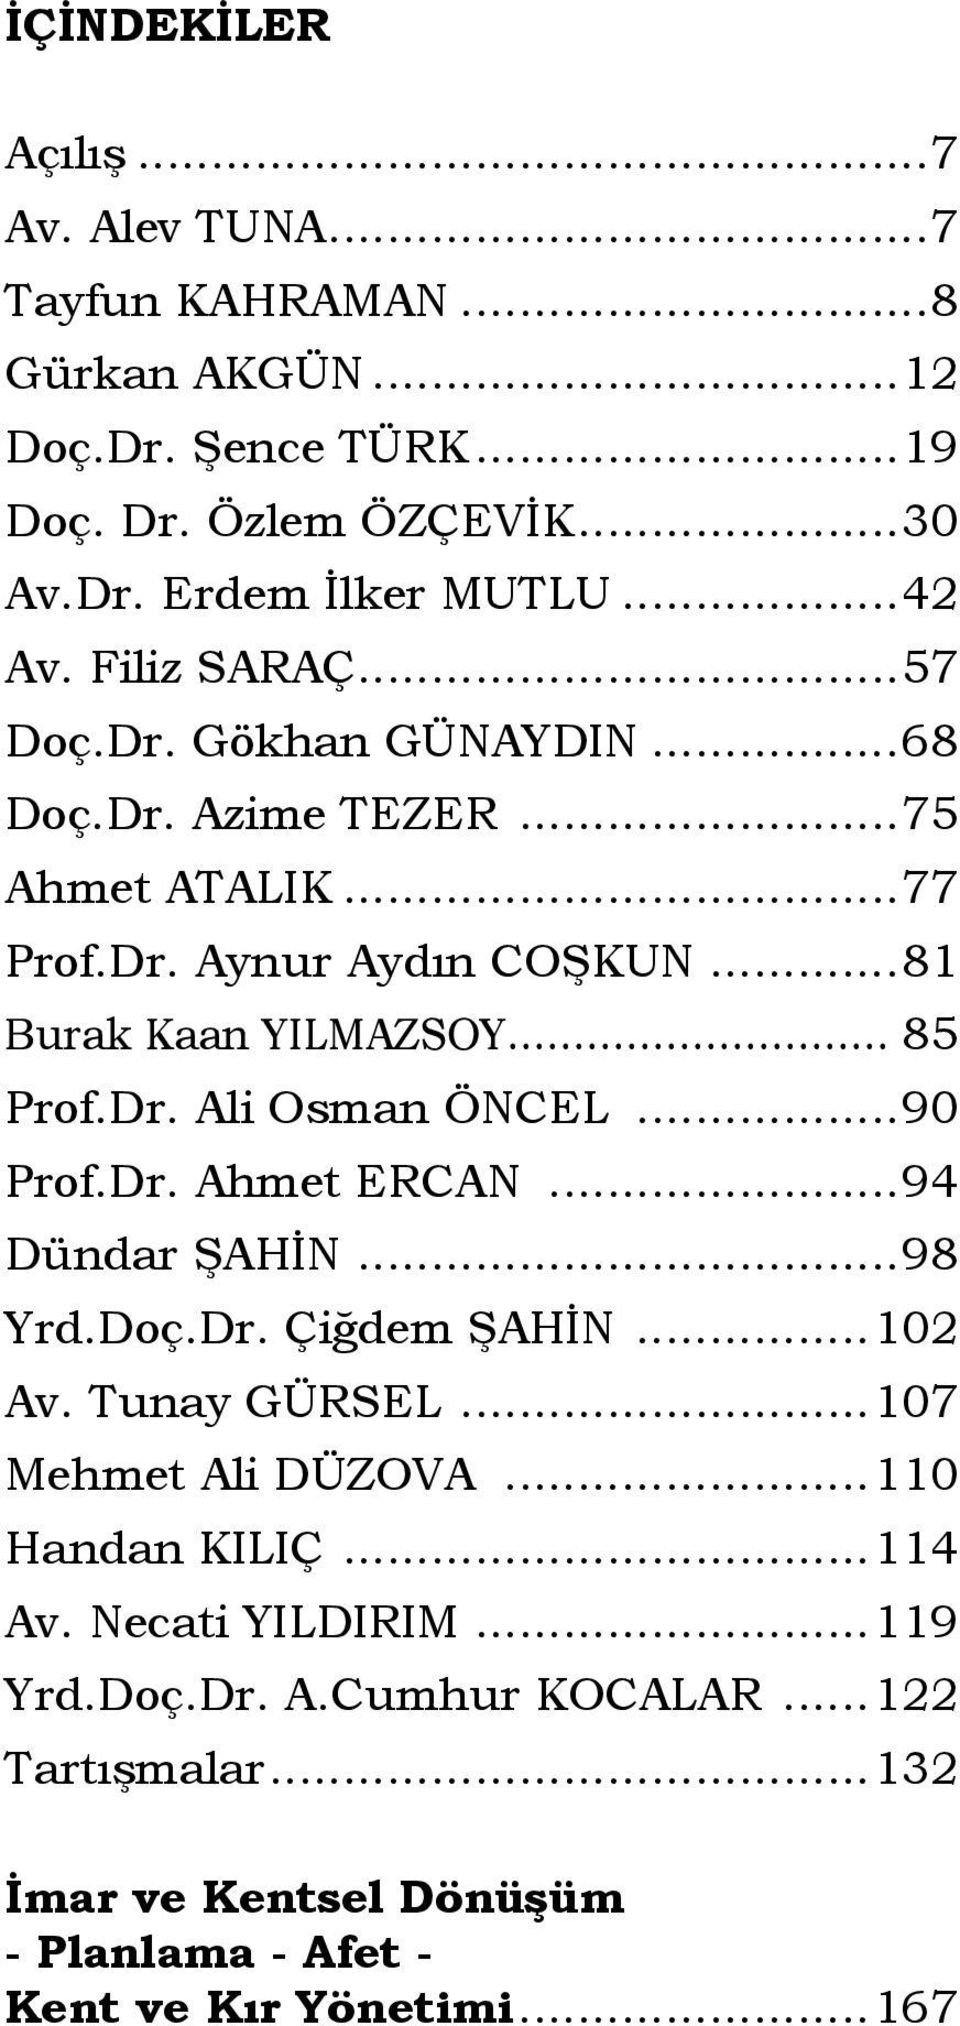 ..90 Prof.Dr. Ahmet ERCAN...94 Dündar ŞAHİN...98 Yrd.Doç.Dr. Çiğdem ŞAHİN...102 Av. Tunay GÜRSEL...107 Mehmet Ali DÜZOVA...110 Handan KILIÇ...114 Av. Necati YILDIRIM.